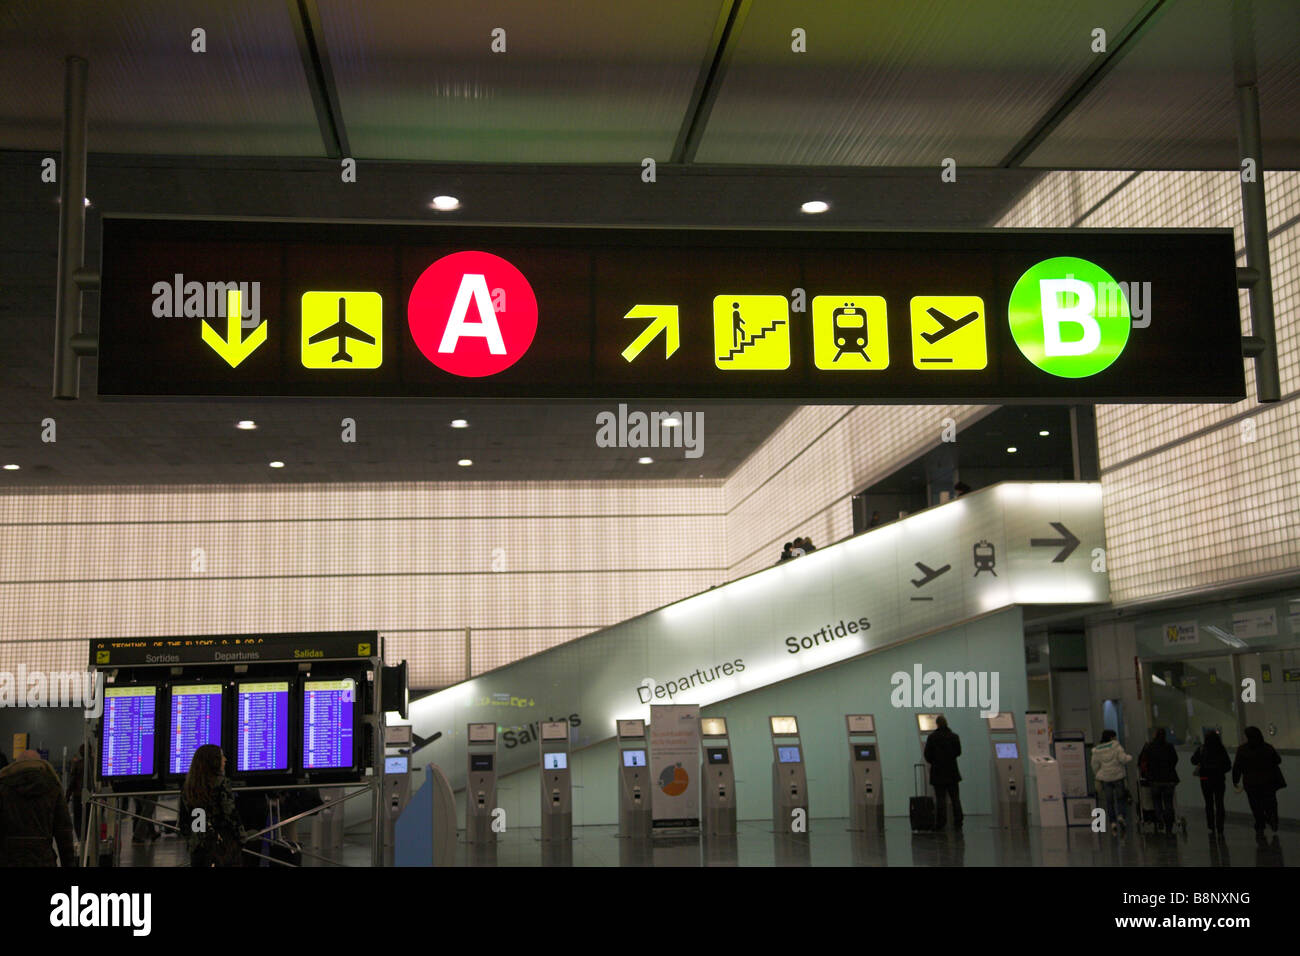 Barcelona airport departure gate Stock Photo - Alamy